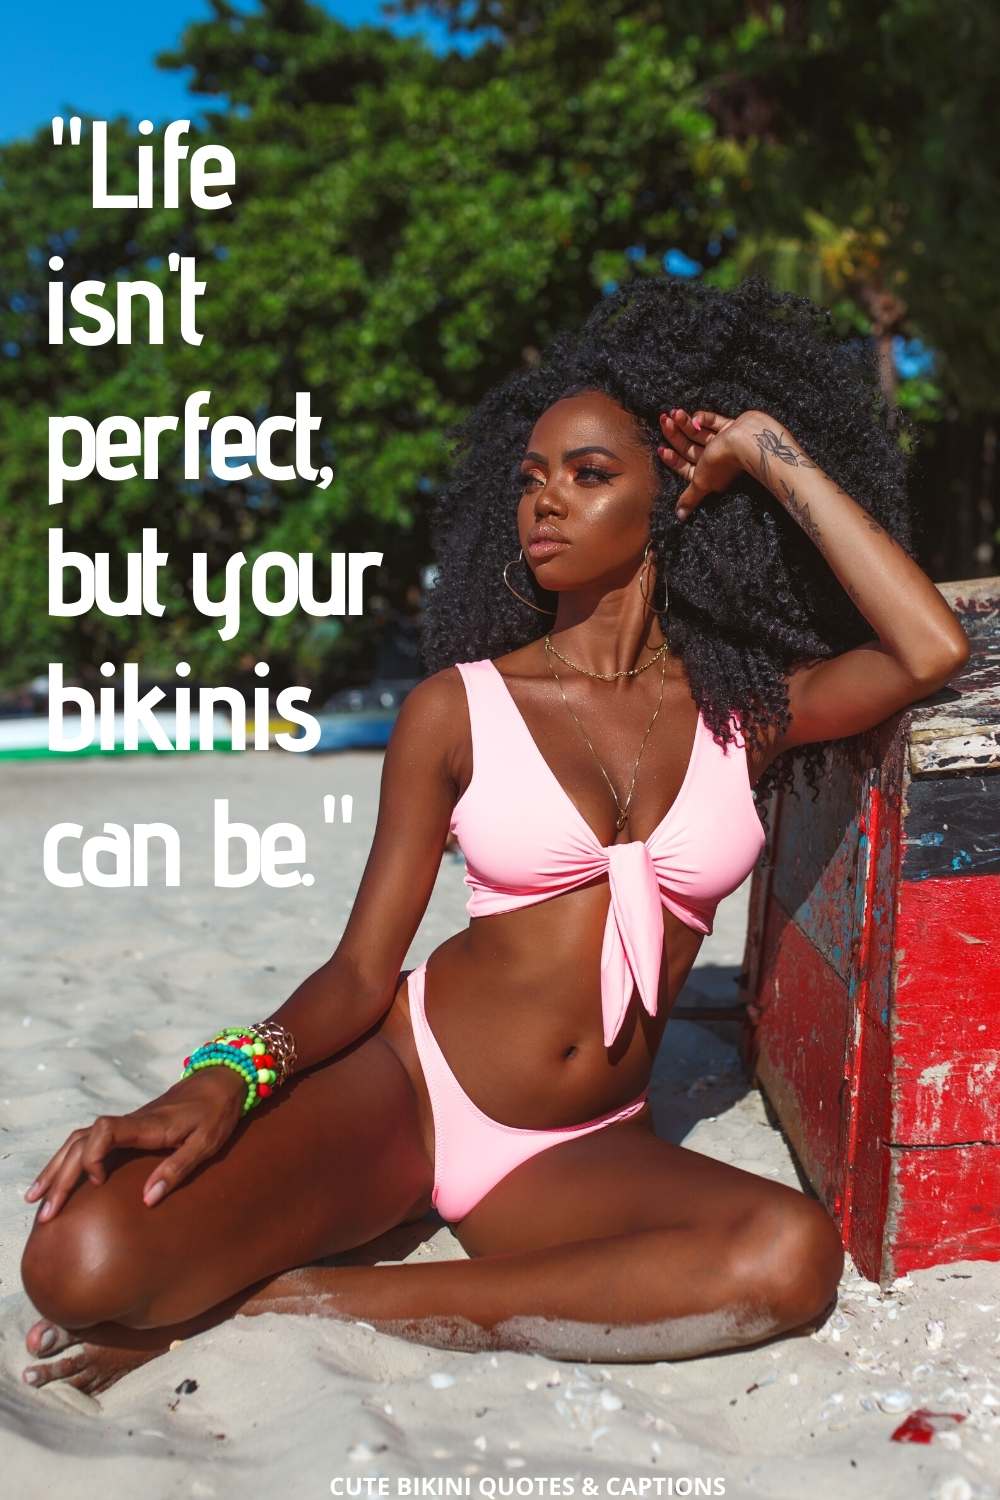 toonhoogte schilder programma Best Bikini Quotes And Captions for Instagram - ItsAllBee | Solo Travel &  Adventure Tips